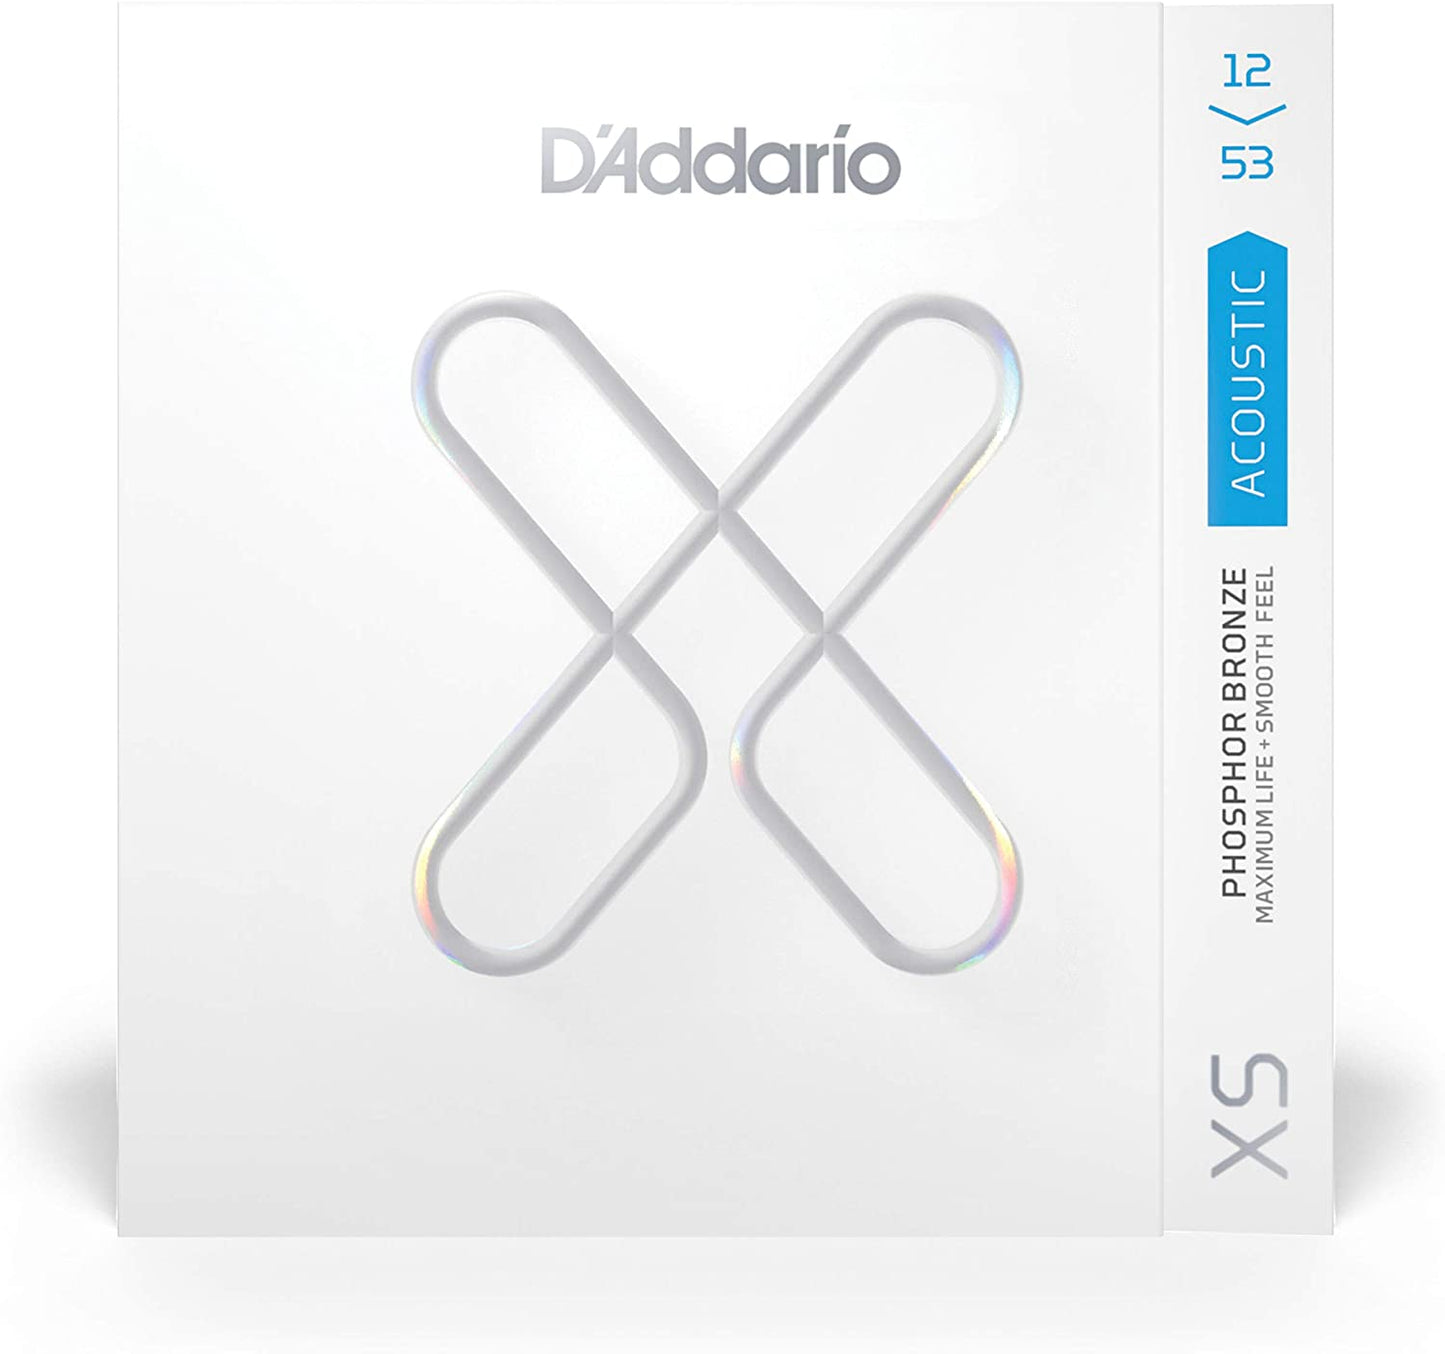 D'Addario XS Coated PB Acoustic Strings